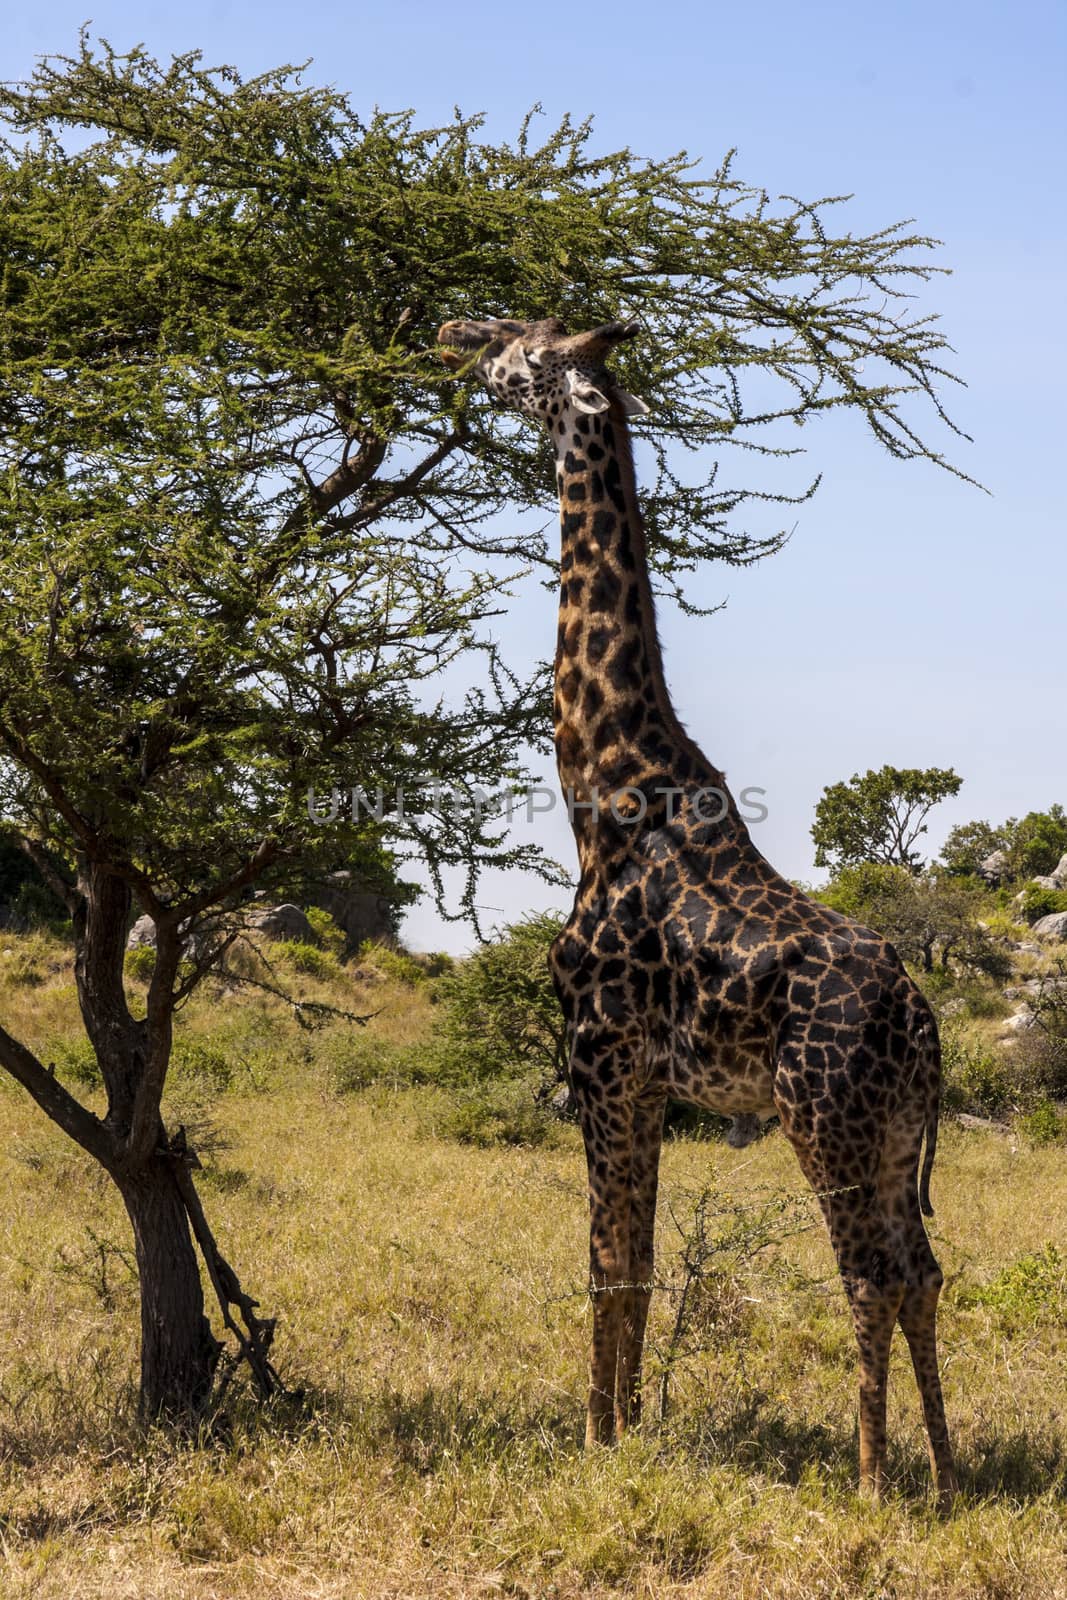 Grazing giraffe in the wilderness of Tanzania